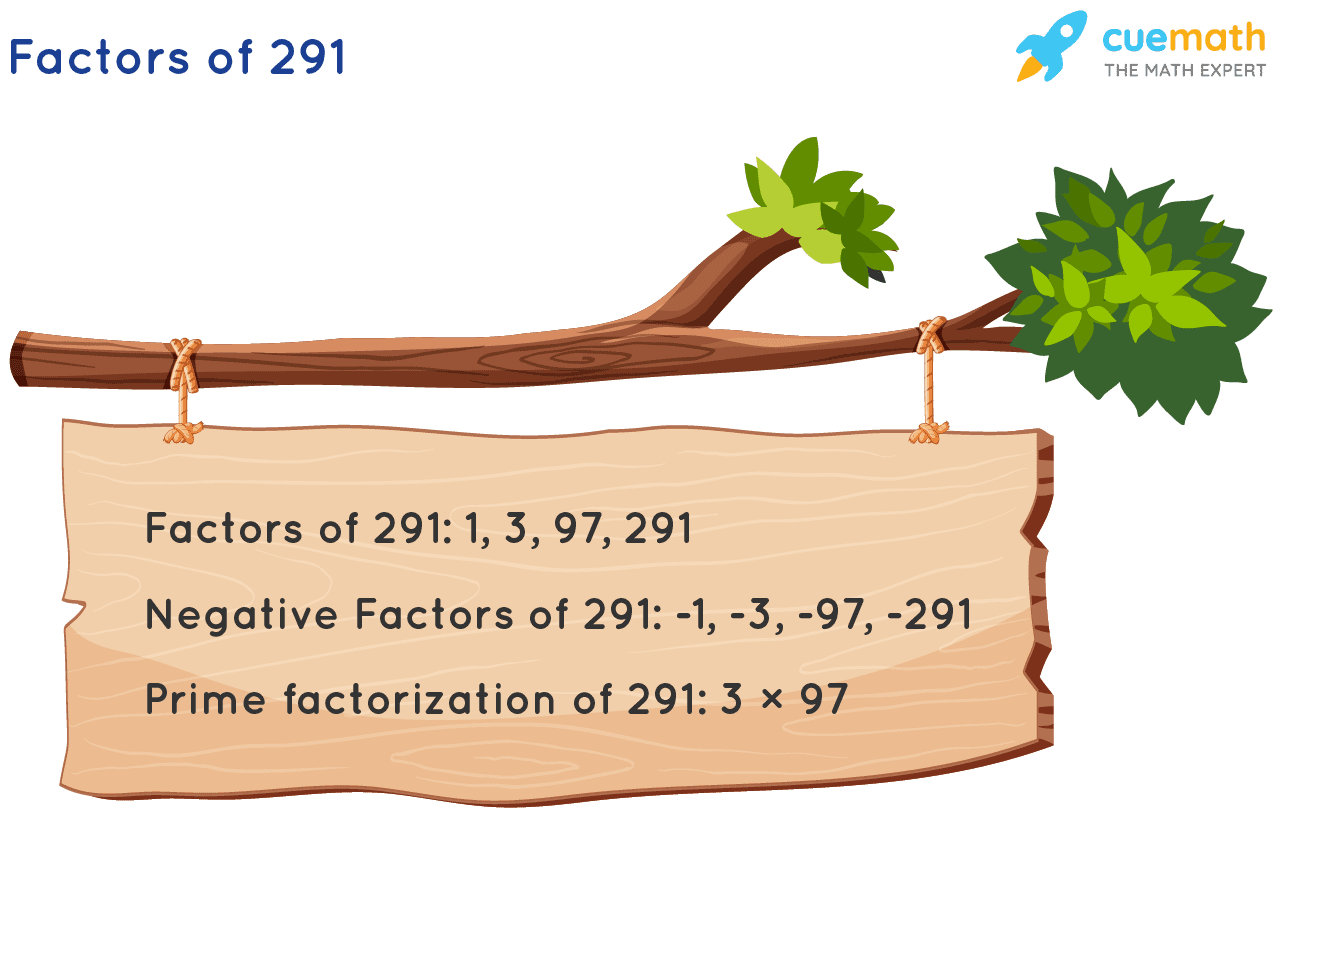 Factors of 291 - Find Prime Factorization/Factors of 291